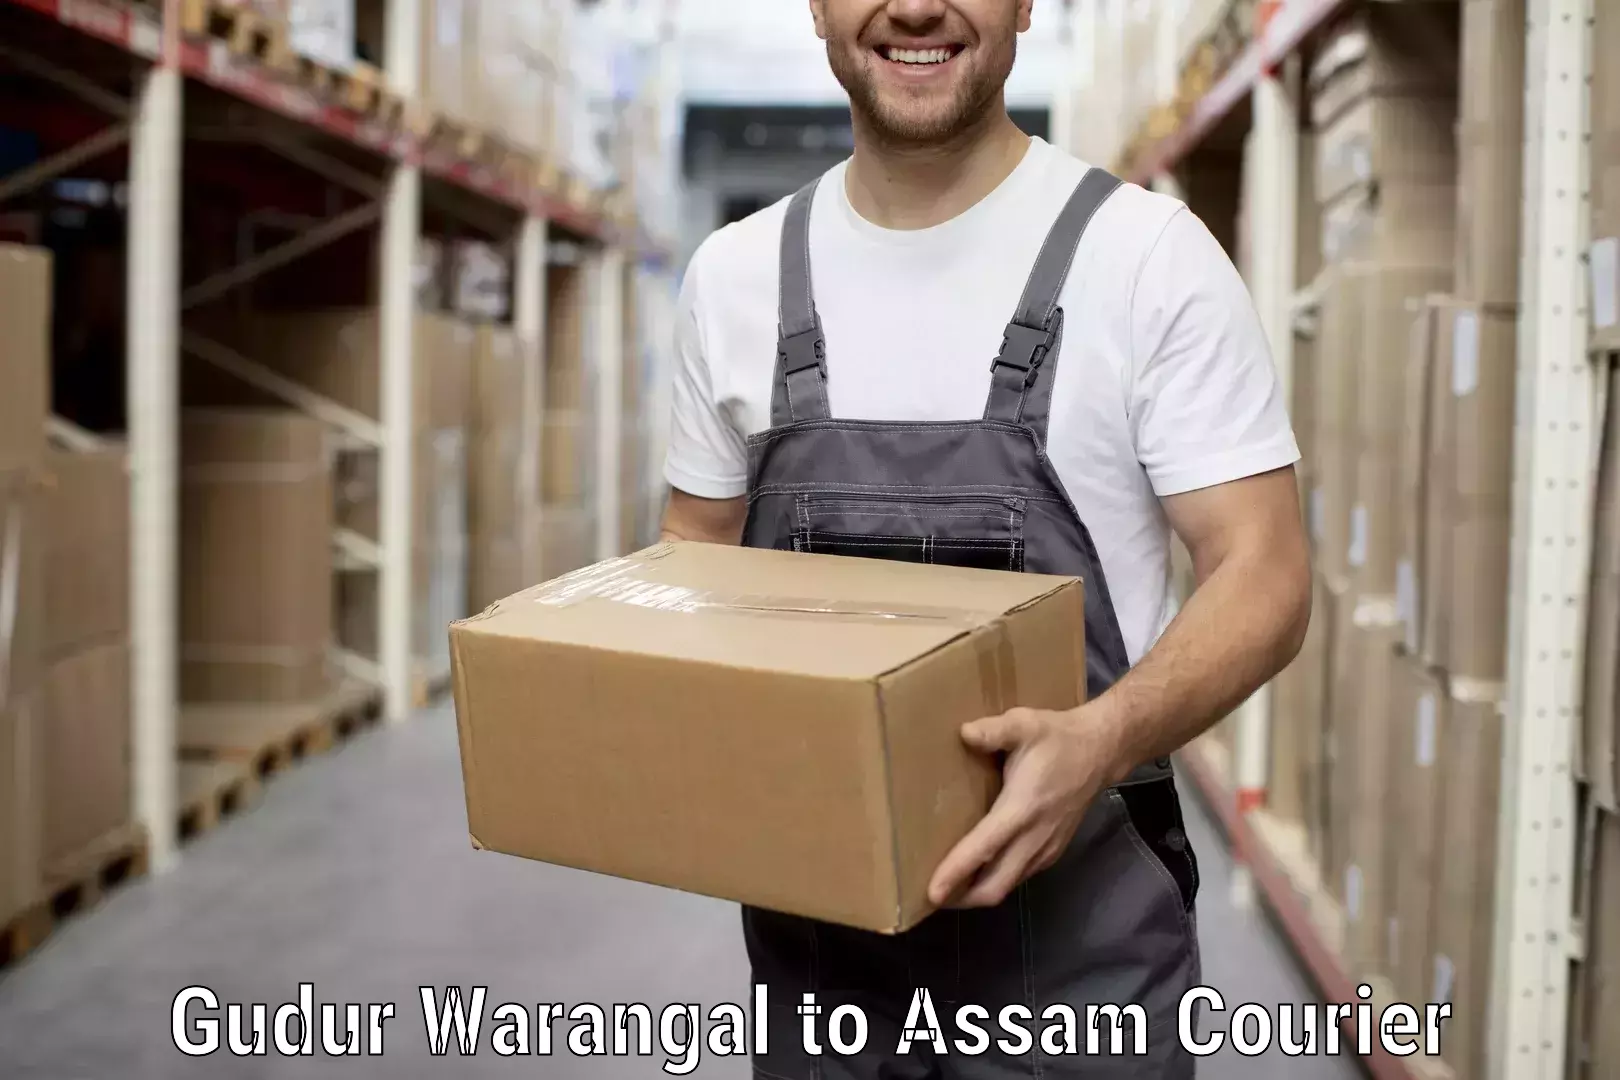 Household moving experts Gudur Warangal to Guwahati